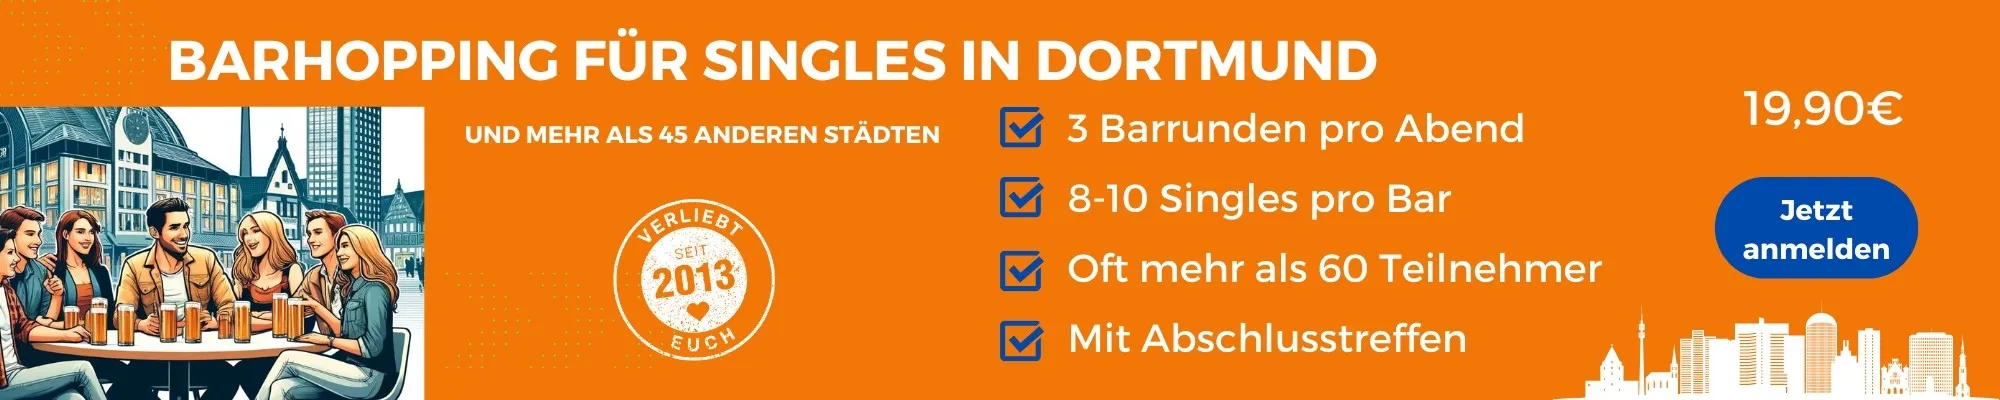 Face-to-Face-Dating-Dortmund: Barhopping für Singles in Dortmund